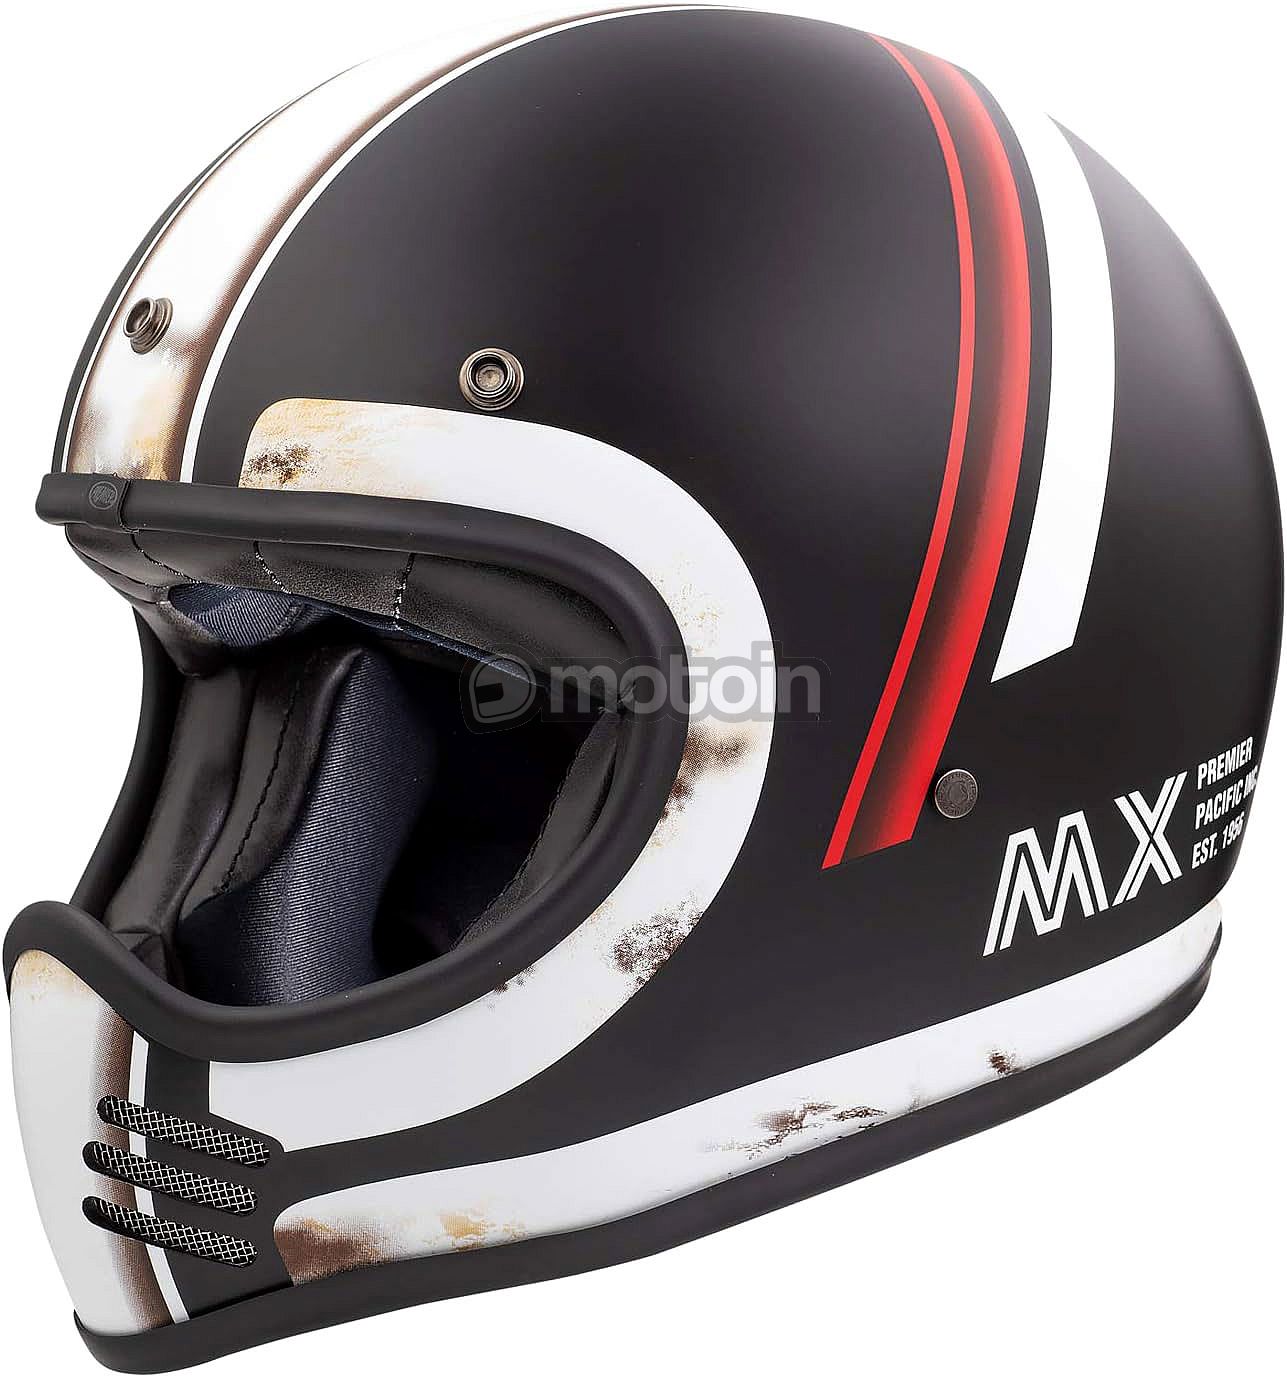 Premier Trophy MX DO O.S., встроенный шлем